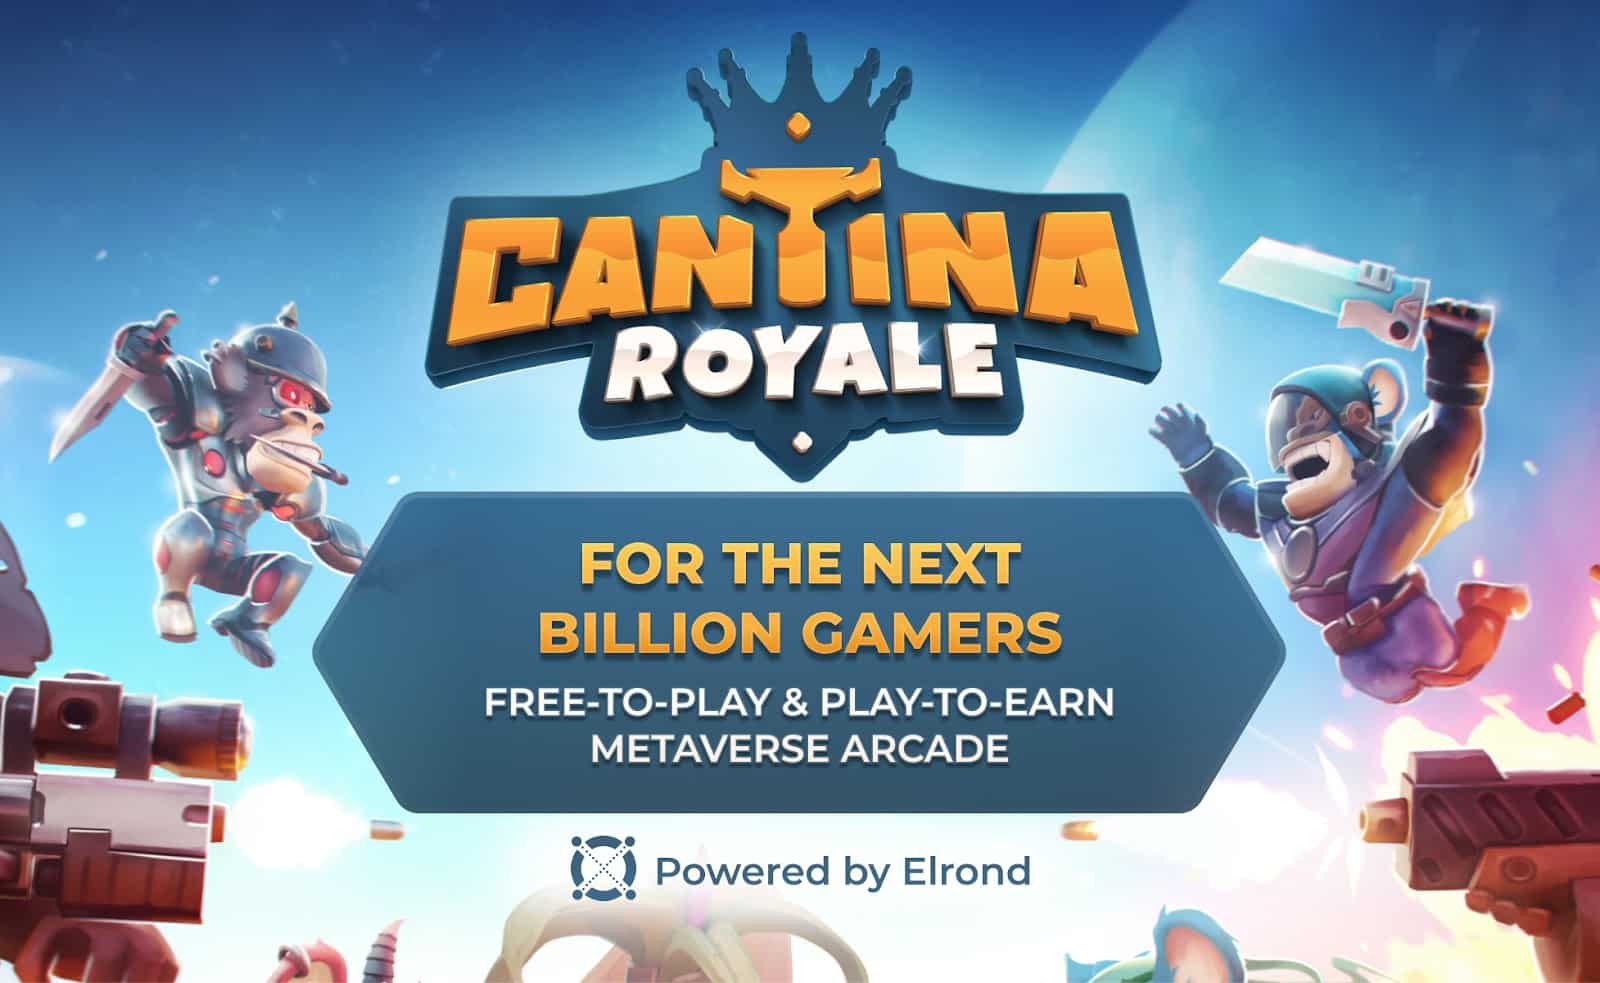 Cantina Royale : Le nouveau jeu d'arcade metaverse Free-To-Play & Play-To-Earn basé sur Elrond